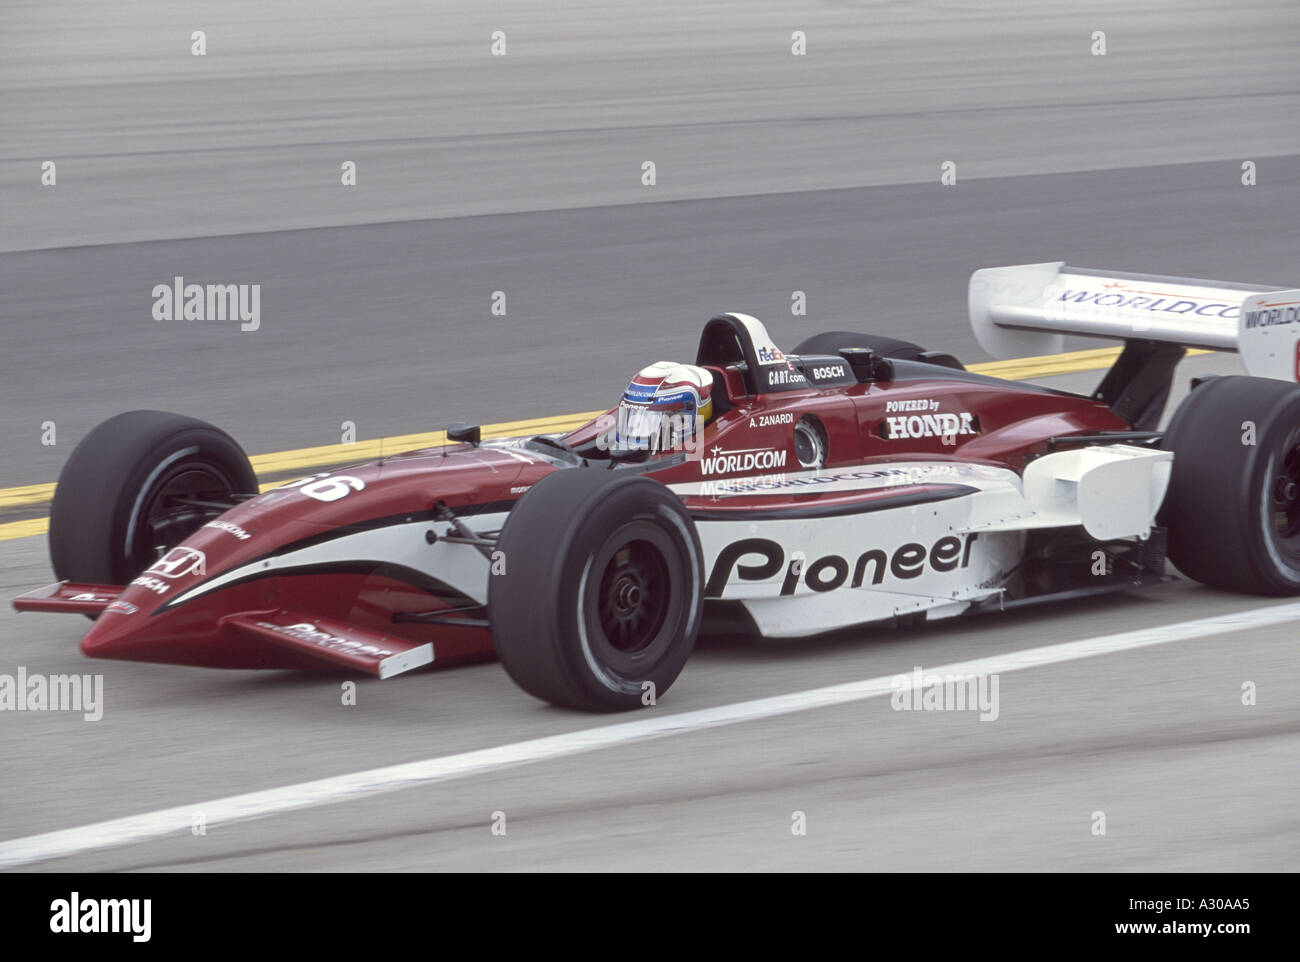 Alex Zanardi races at the Milwaukee Mile 2001 Stock Photo